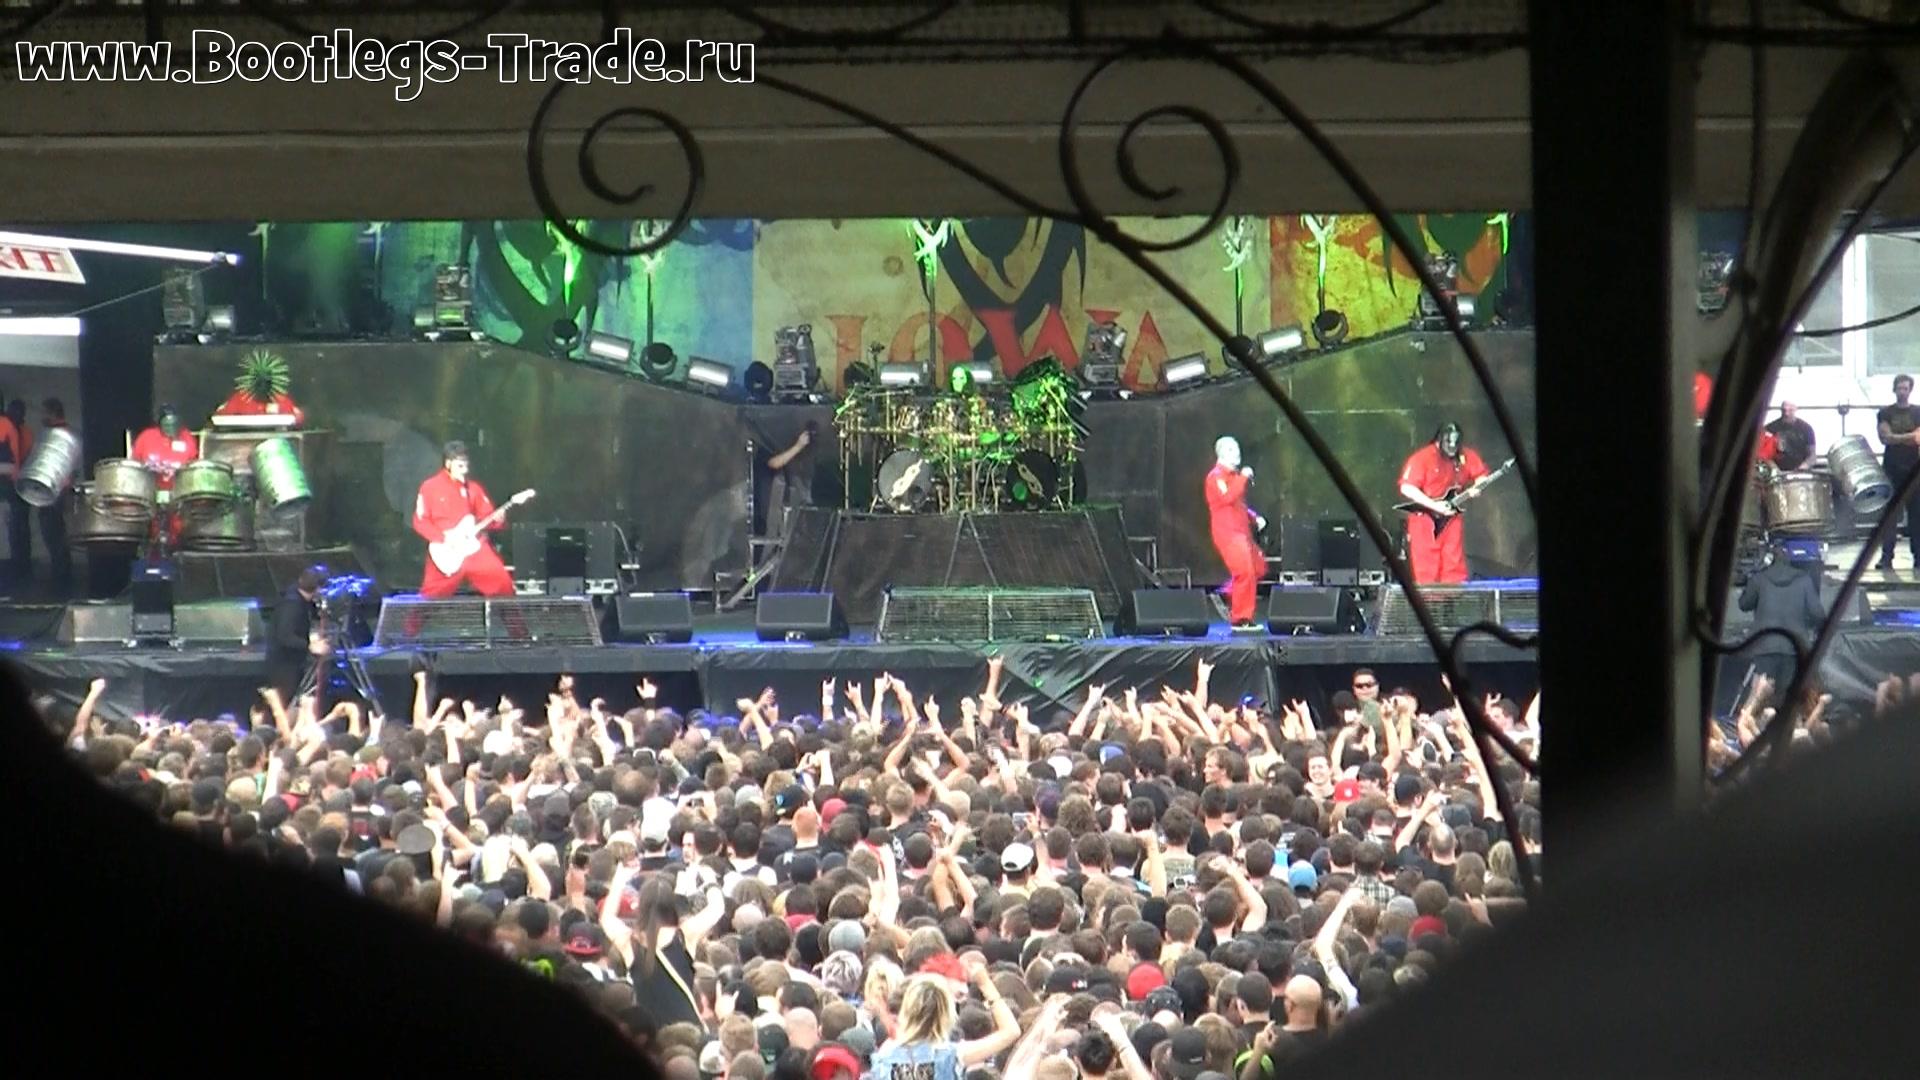 Slipknot 2012-03-02 Soundwave Melbourne 2012, Royal Melbourne Showgrounds, Melbourne, Australia (Source 2 HD 1080)